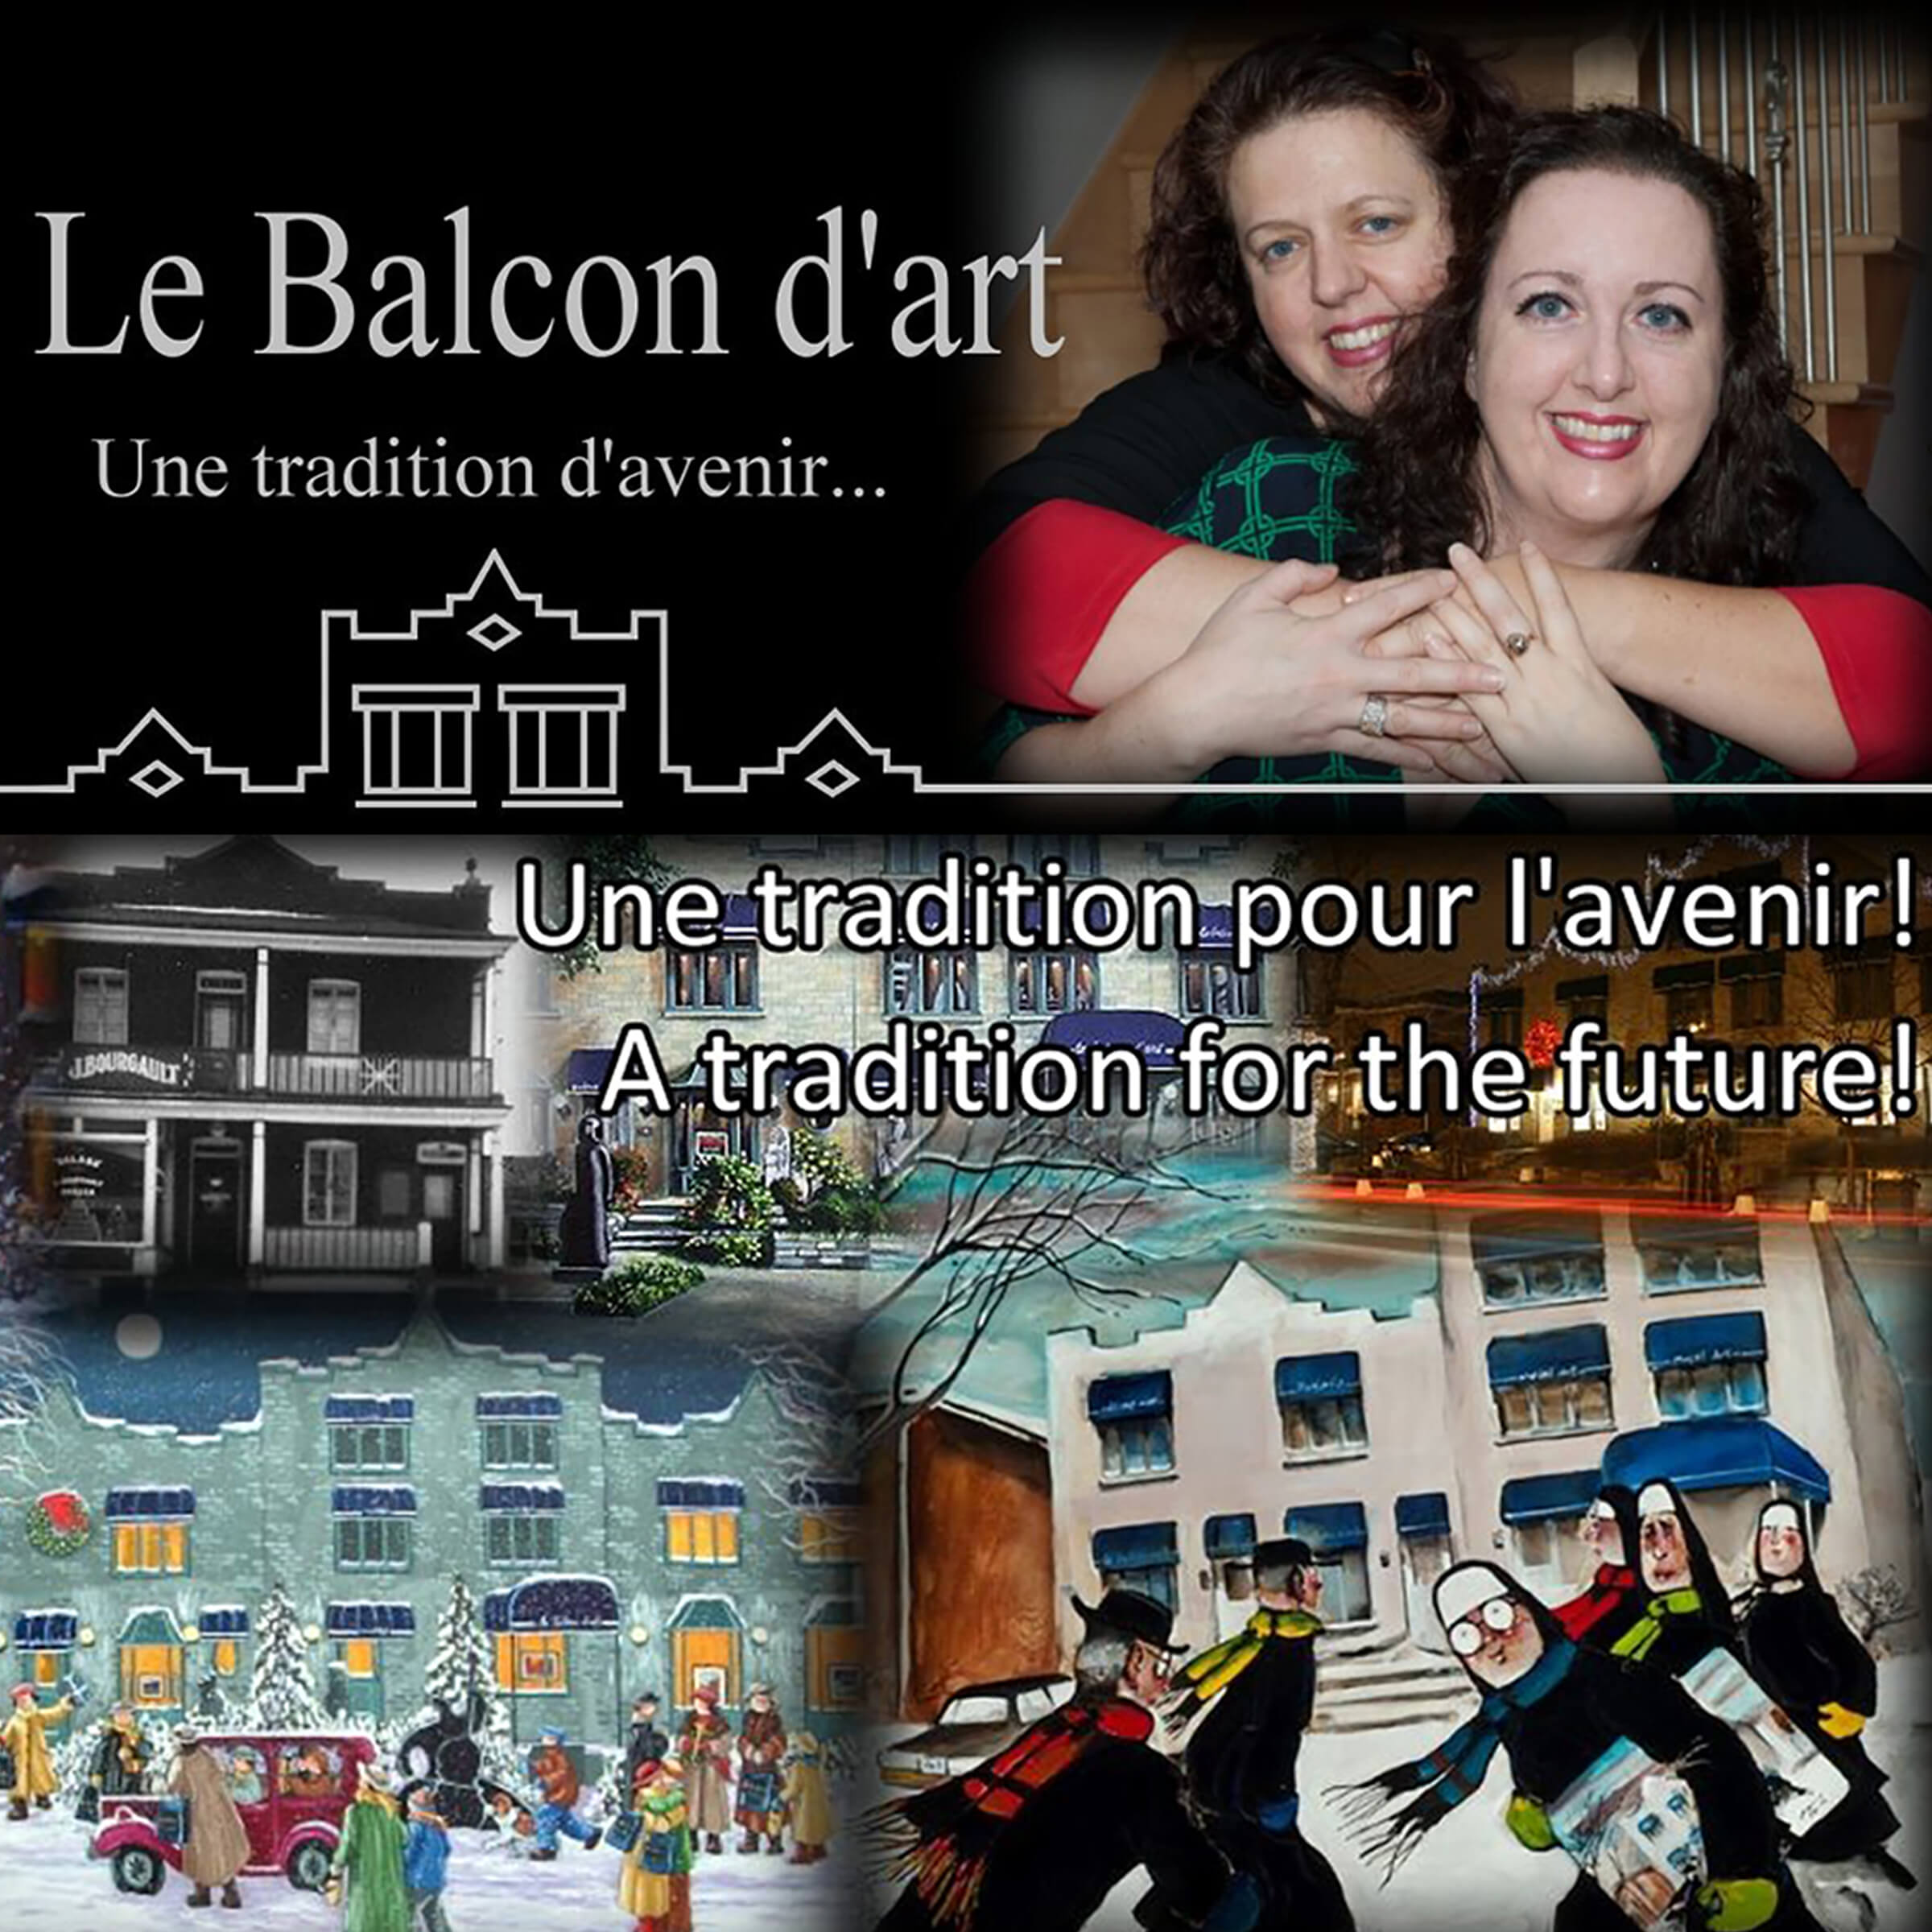 Le_Balcon d'art Gallery